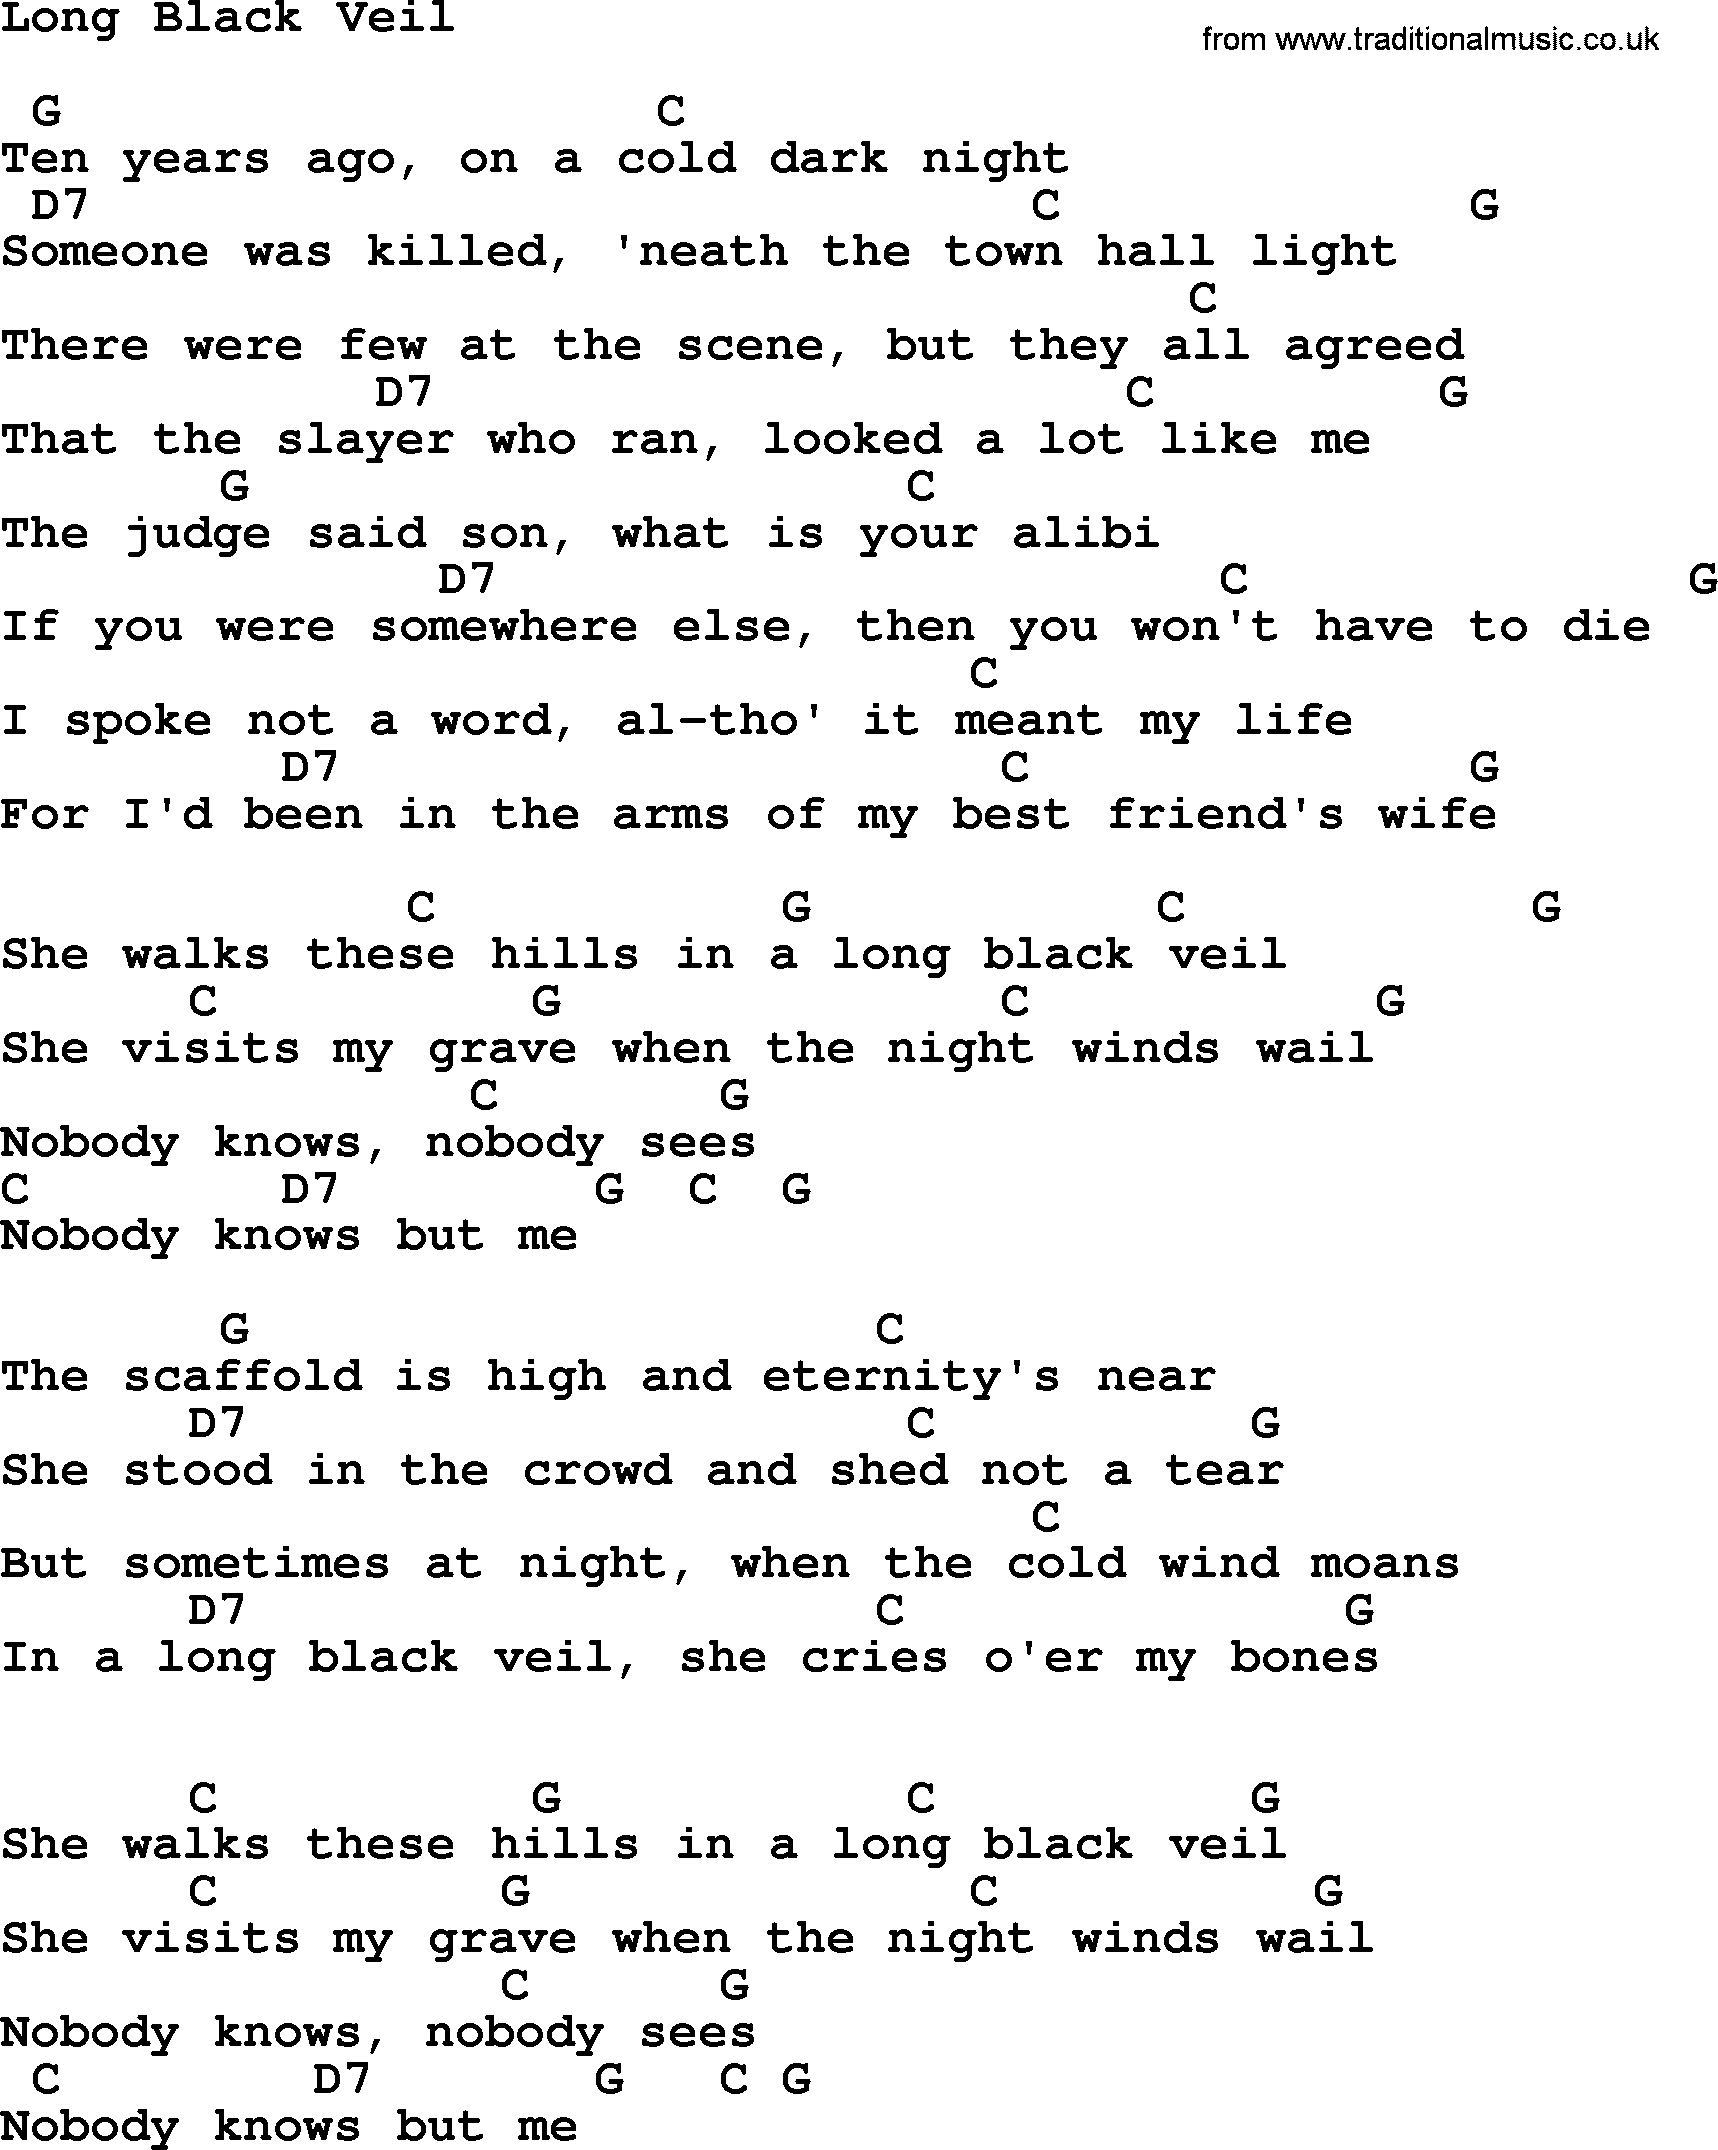 Johnny Cash song Long Black Veil, lyrics and chords